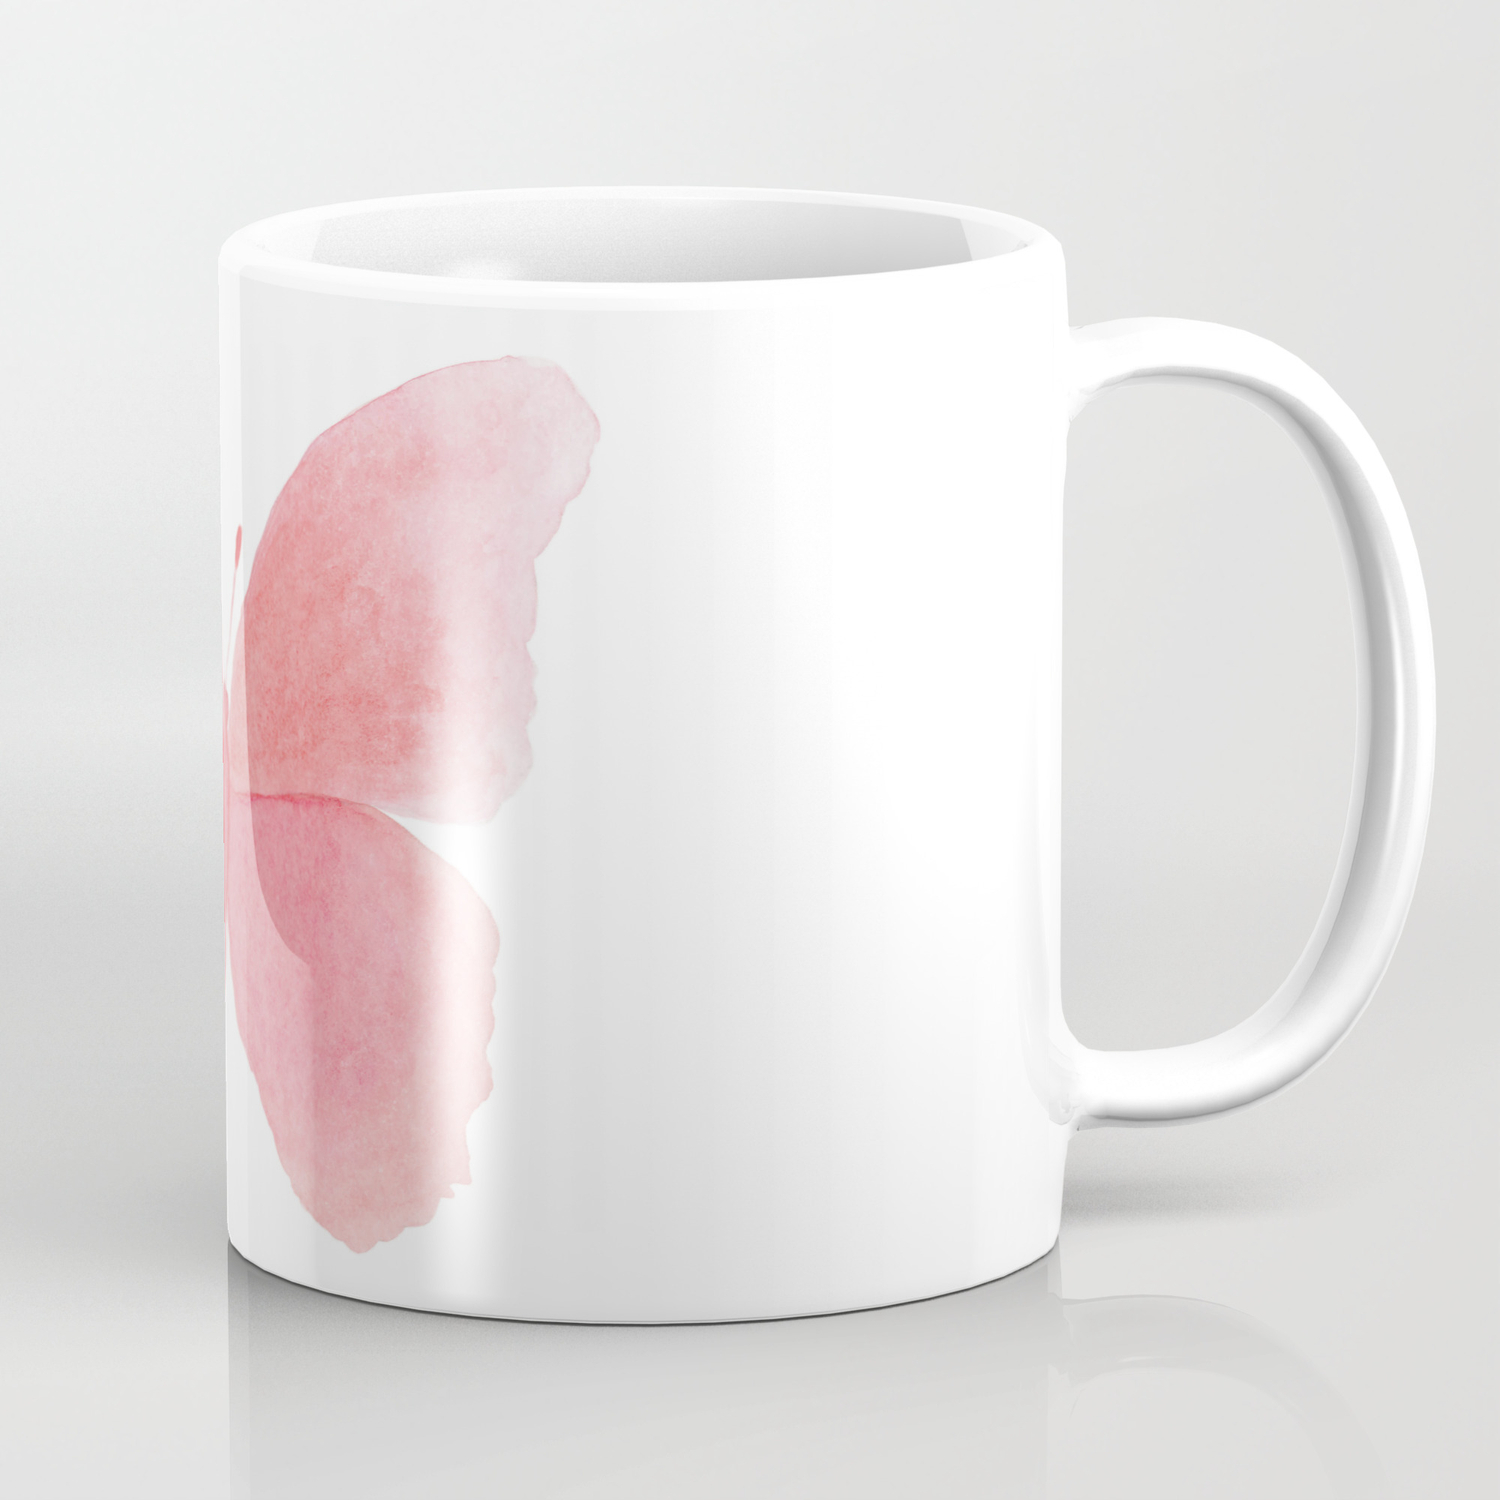 Small Ceramic Mug Pink Butterfly Mug